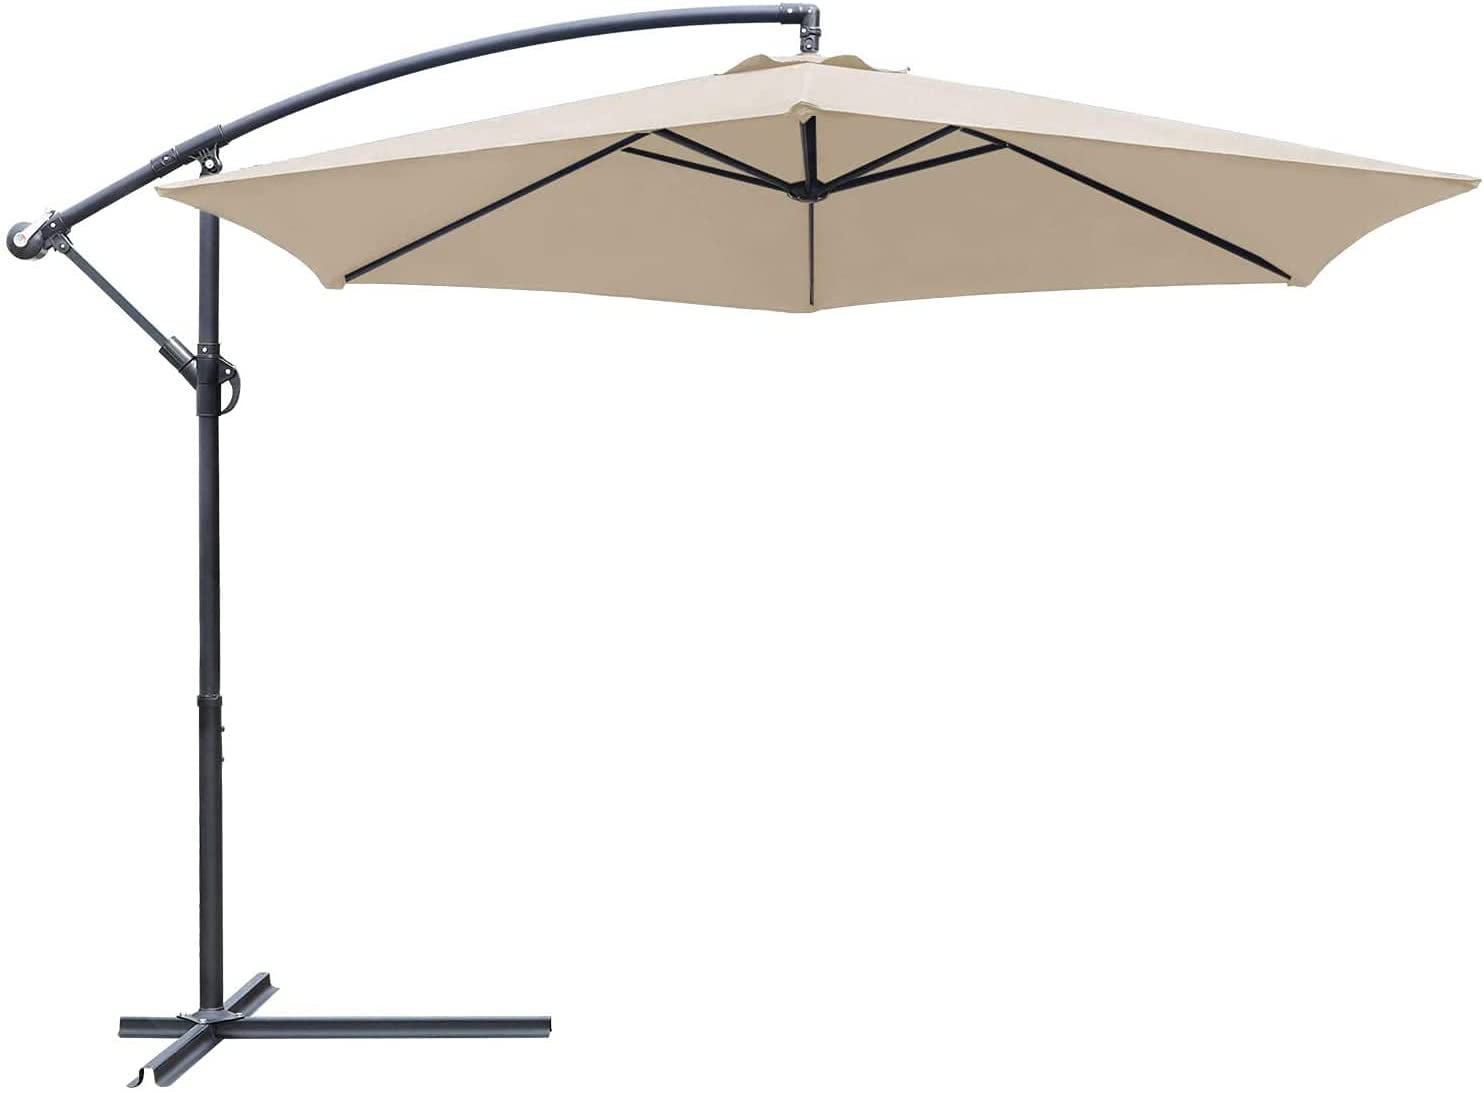 New 10' FDW Beige Patio Umbrella Offset Hanging Umbrella Outdoor Market Umbrella 